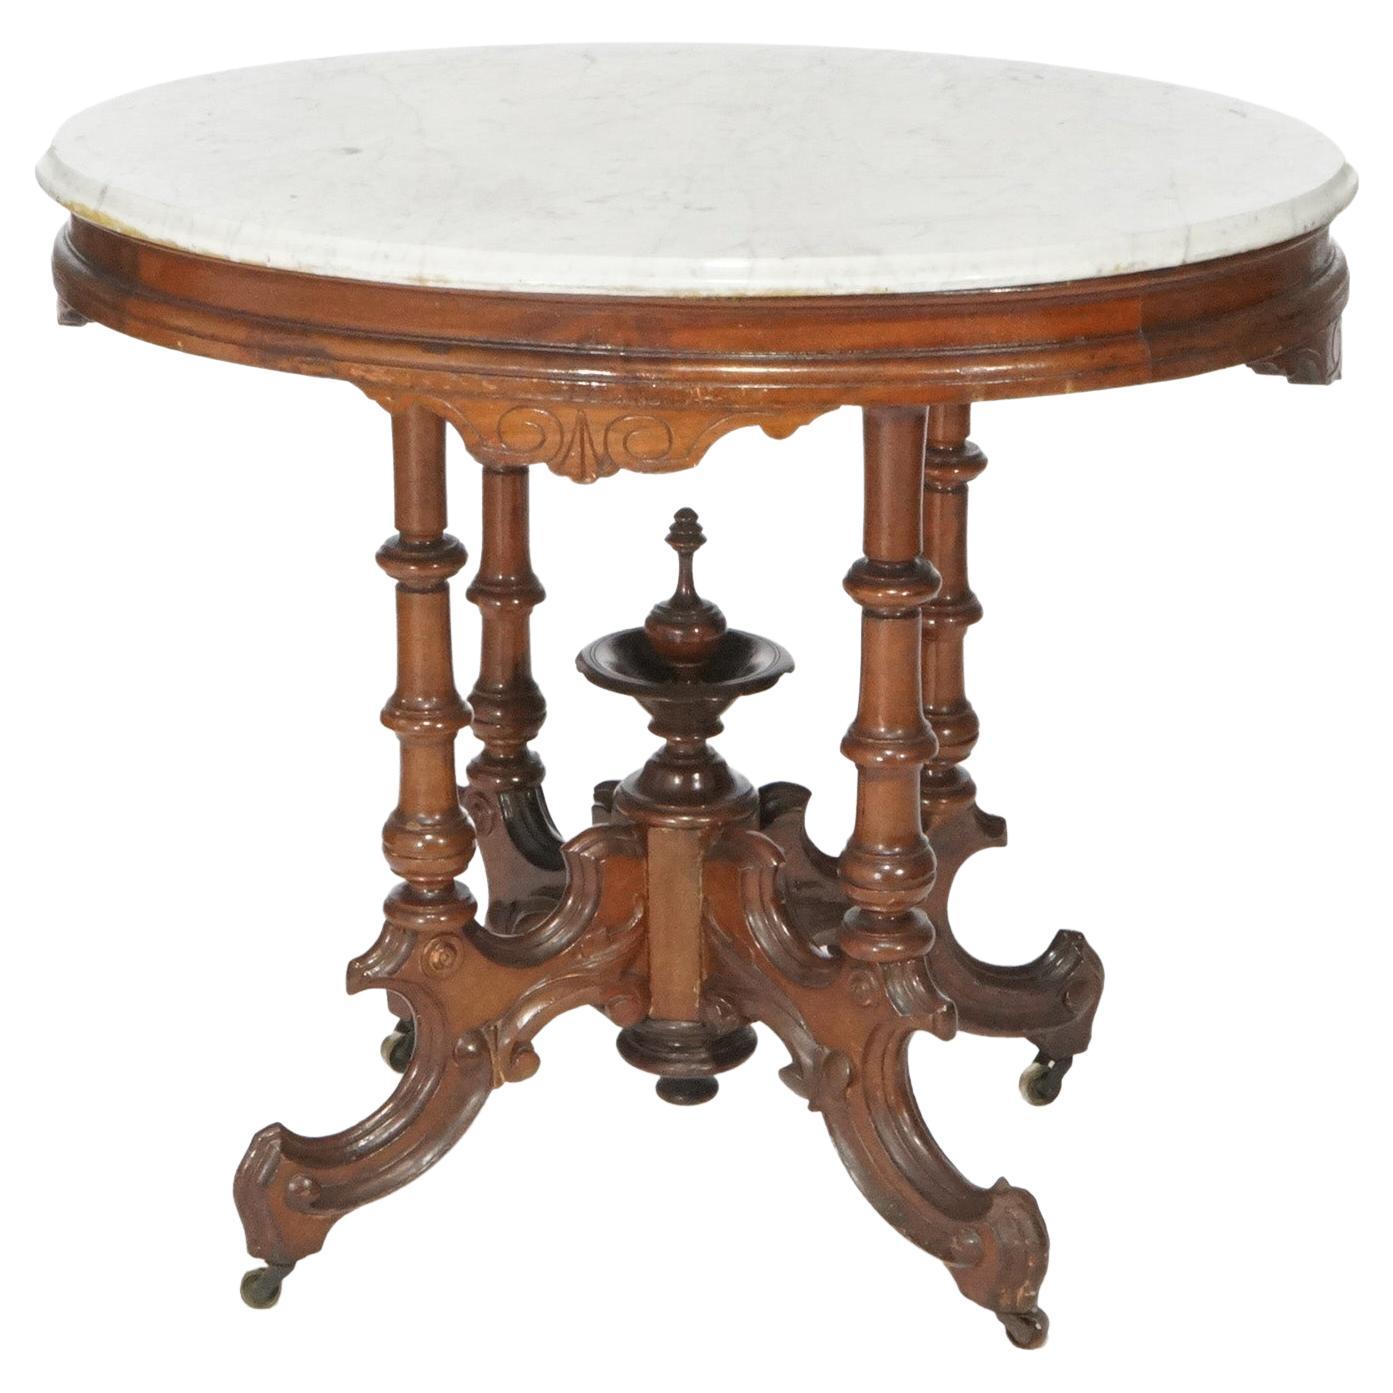 Antique Renaissance Revival Walnut Oval Marble Top Parlor Table, circa 1890